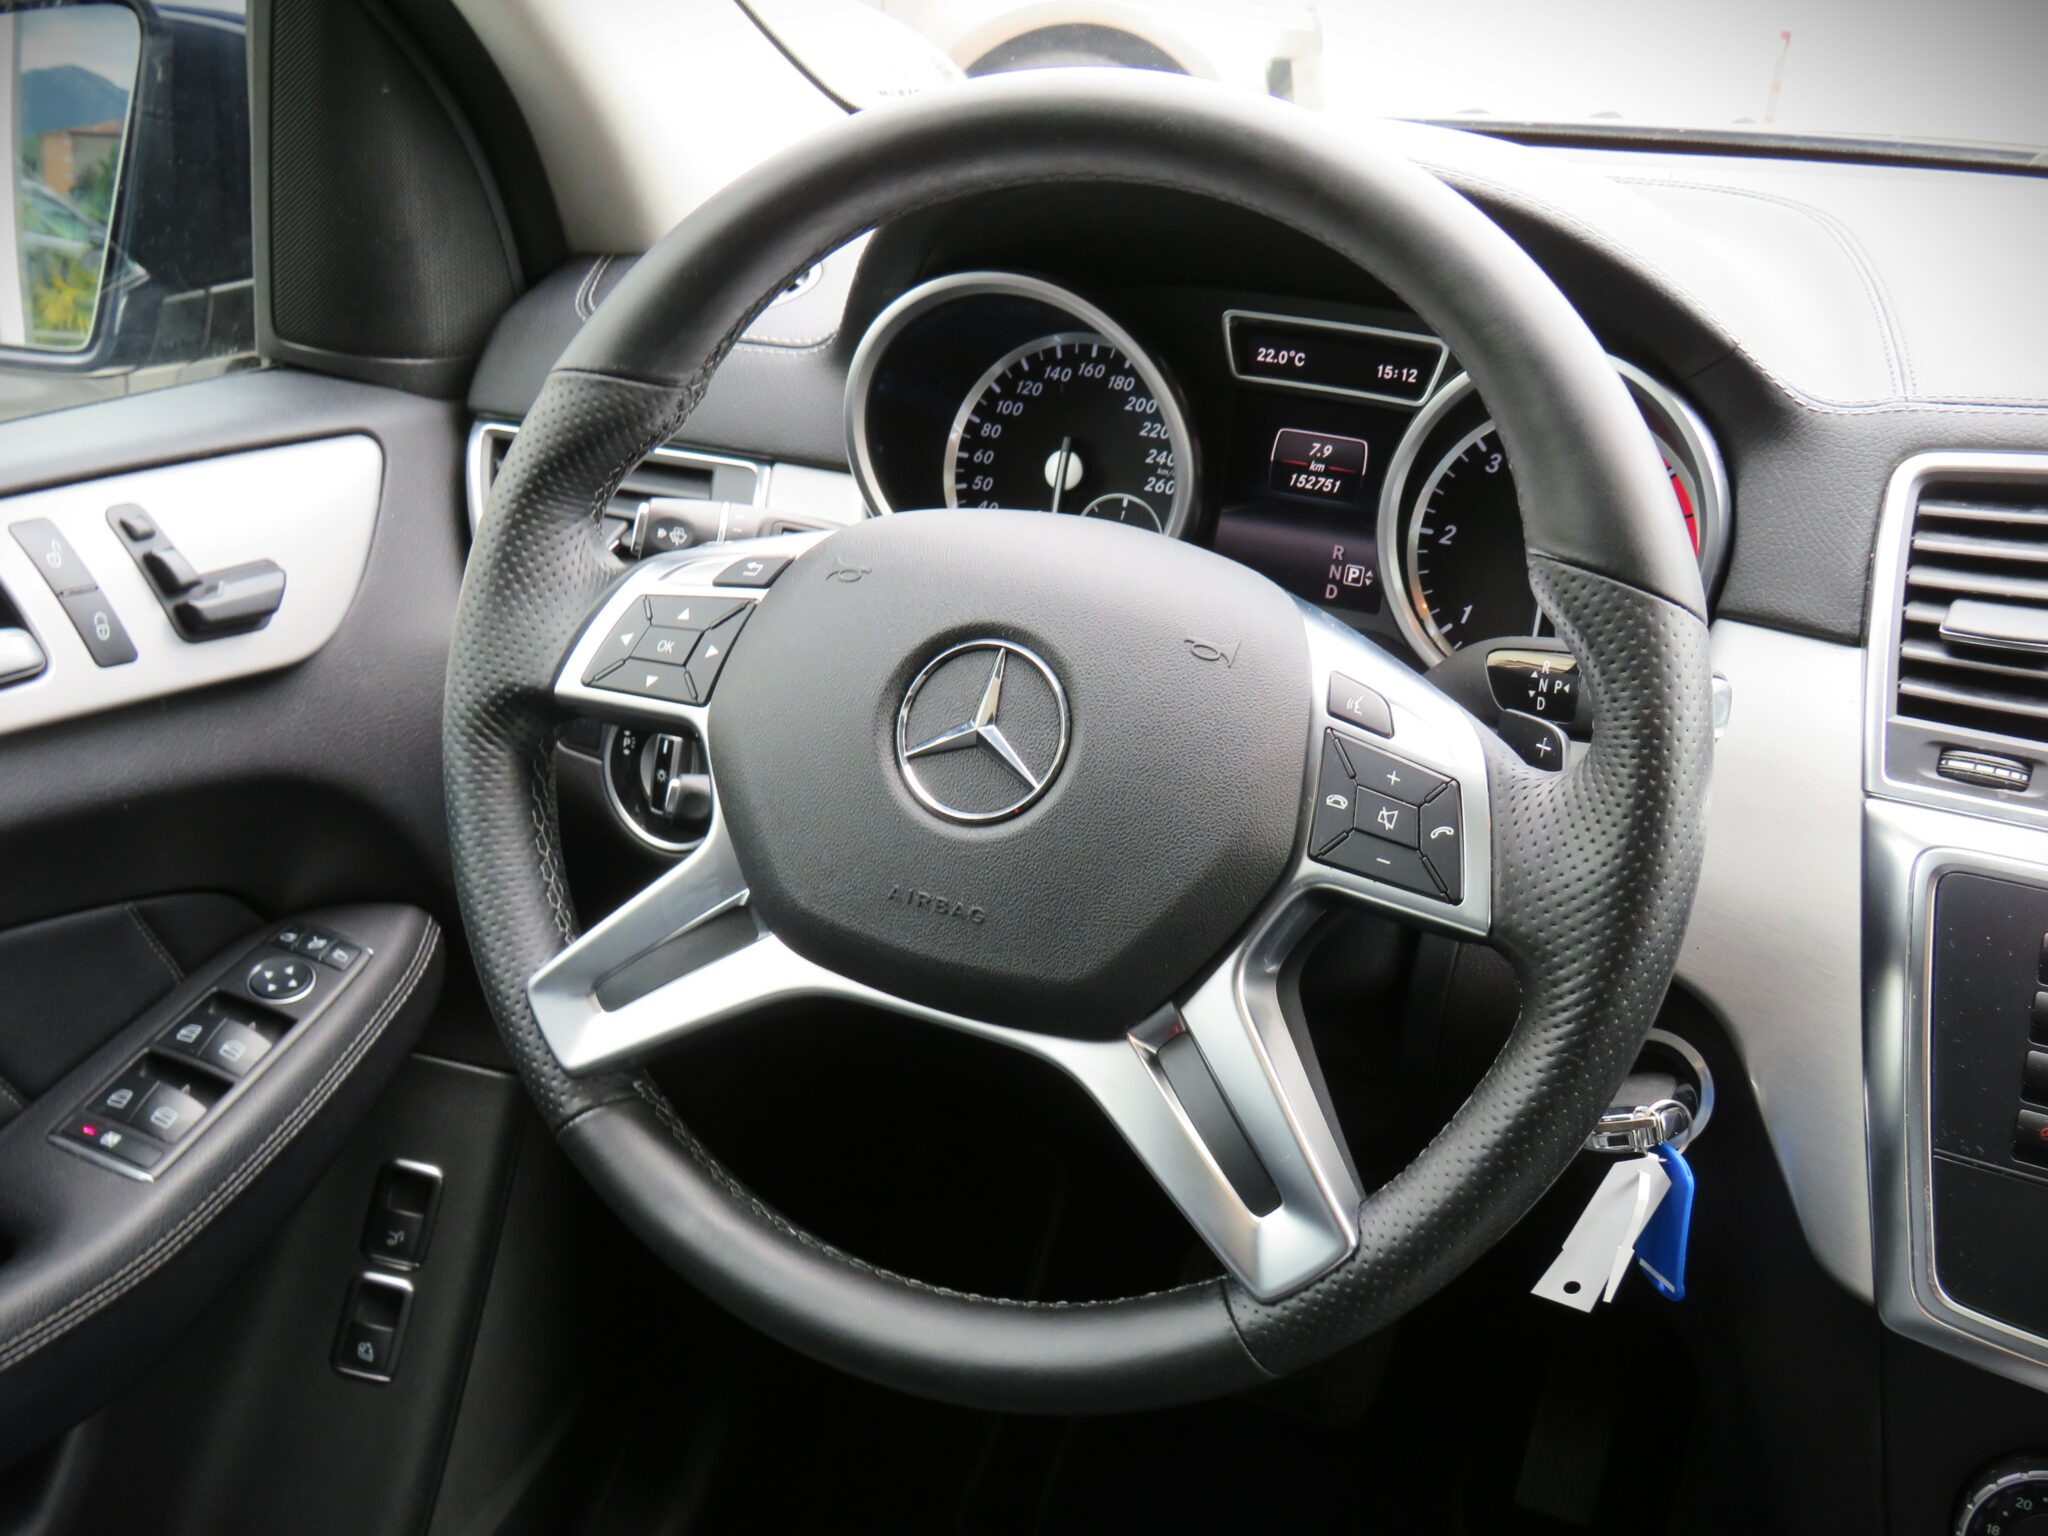 Mercedes-Benz GL